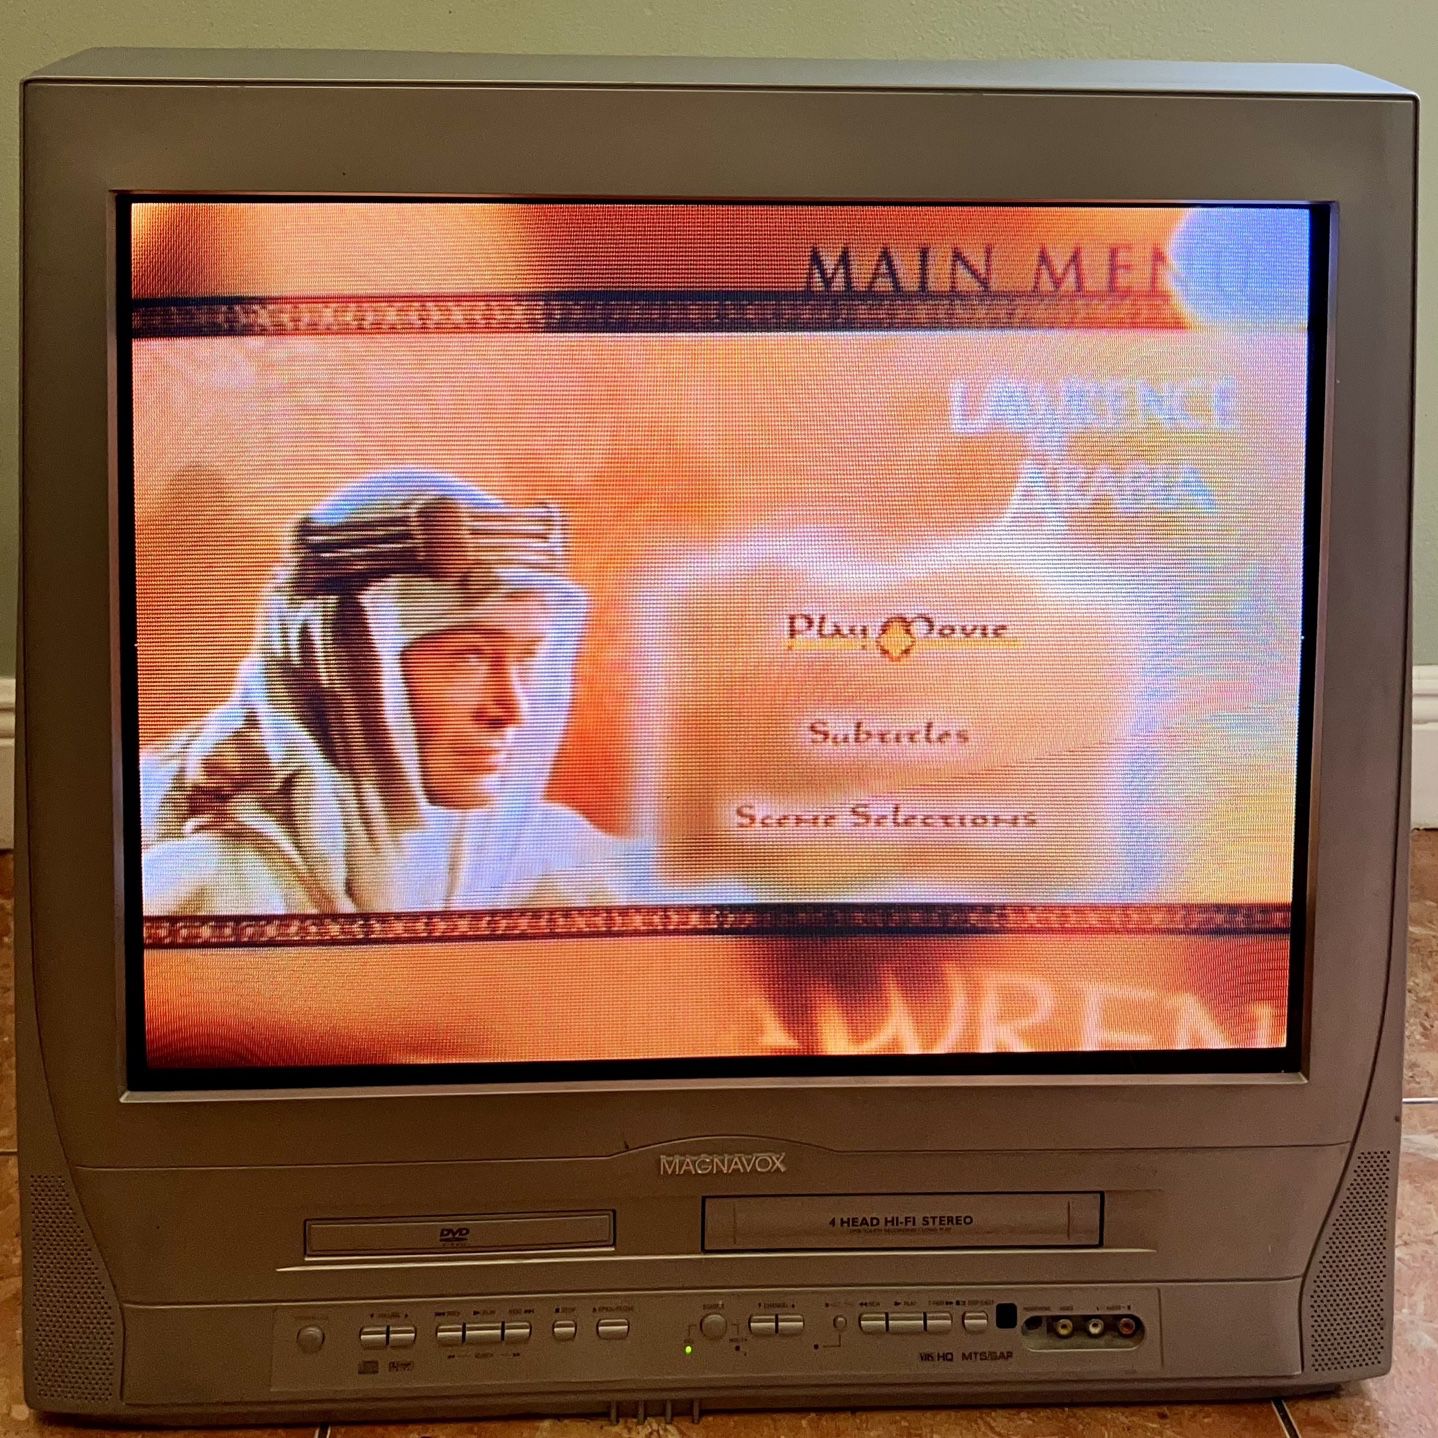 27” Magnavox CRT TV DVD VCR Retro Gaming - 27MC4304/17 - 2005 Model